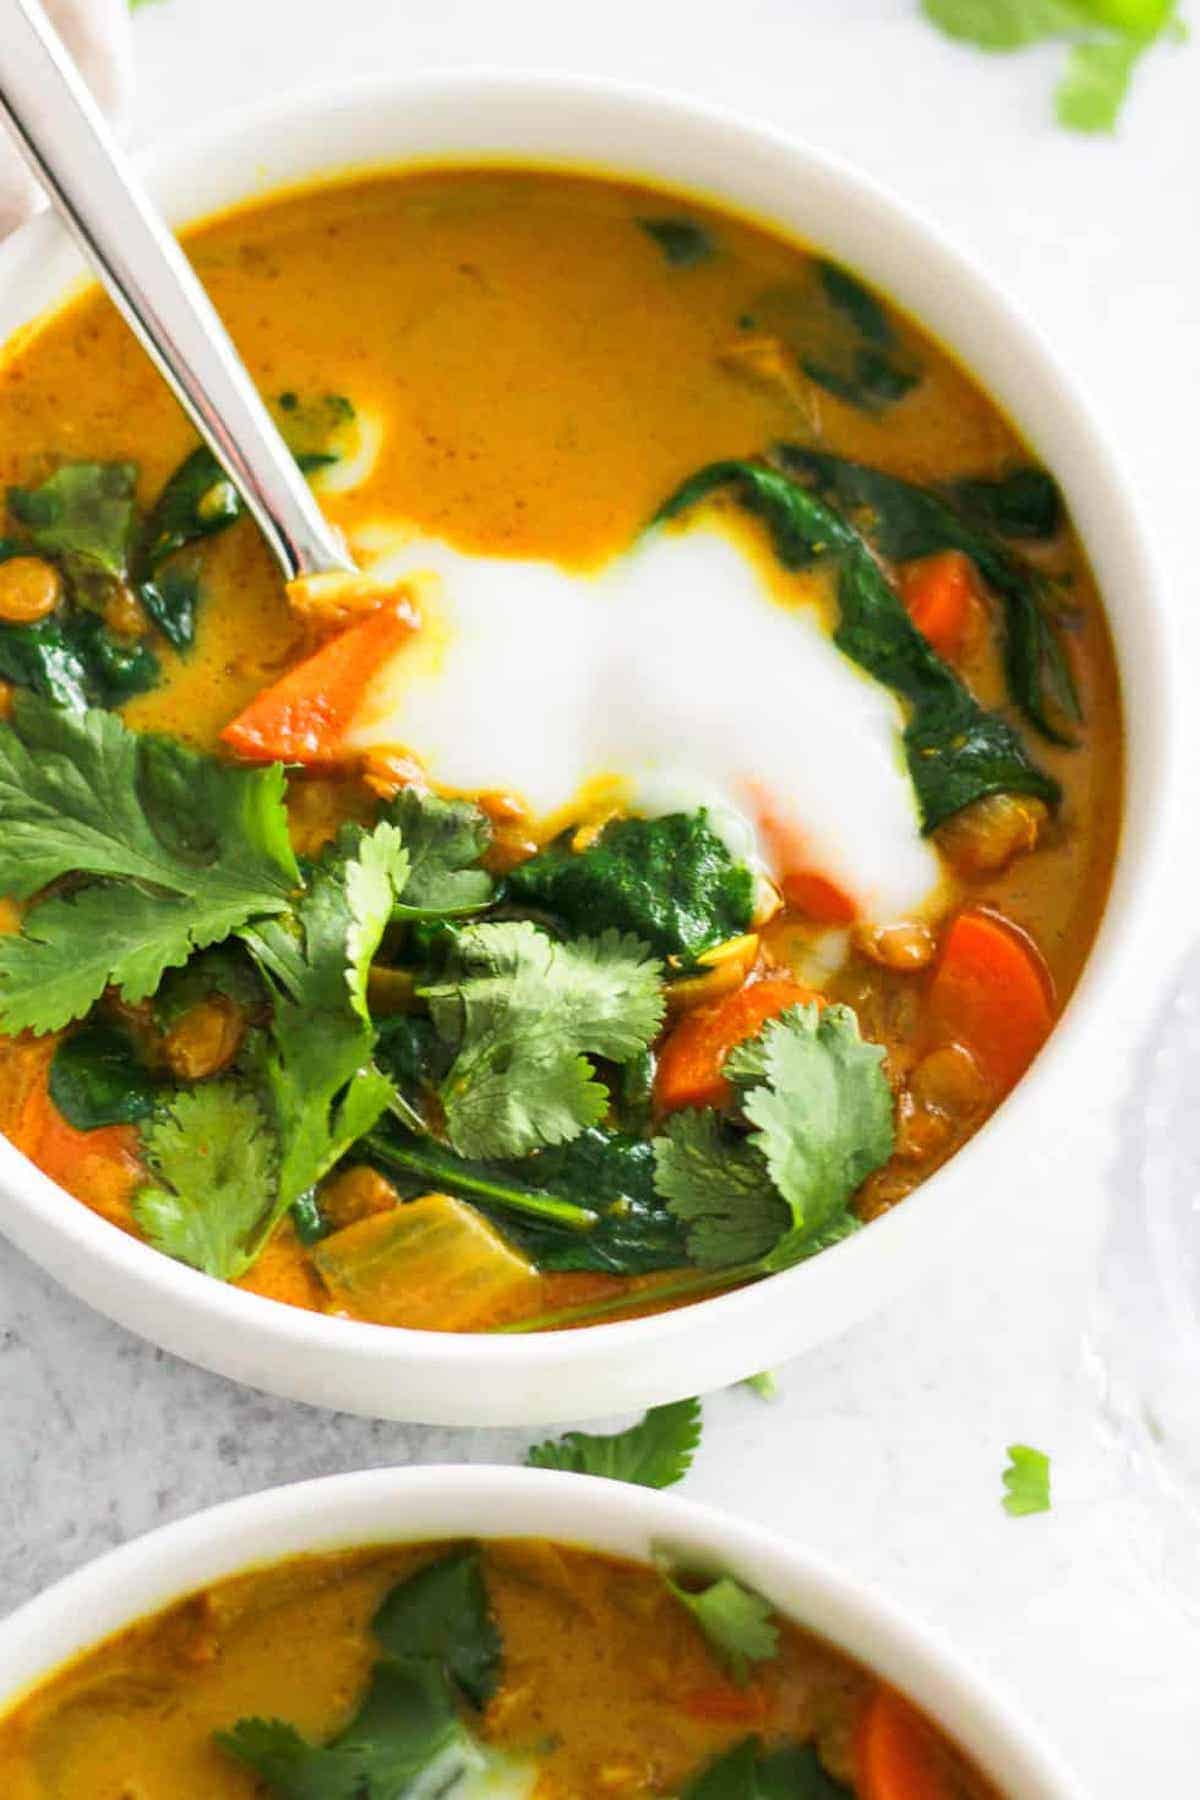 turmeric lentil soup with herbs and plain yogurt.